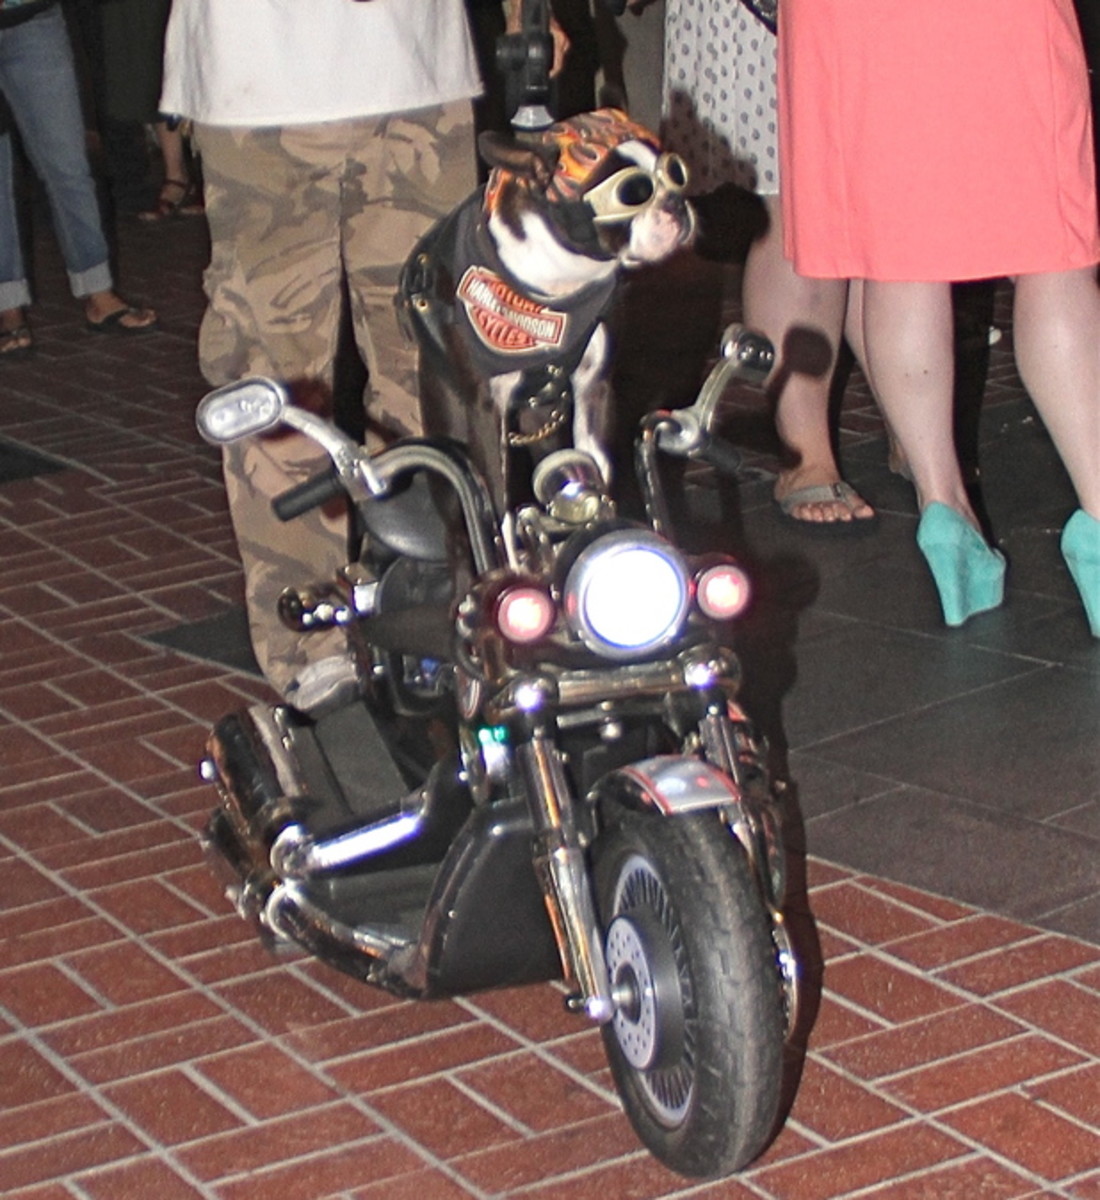 biker-chick-costume